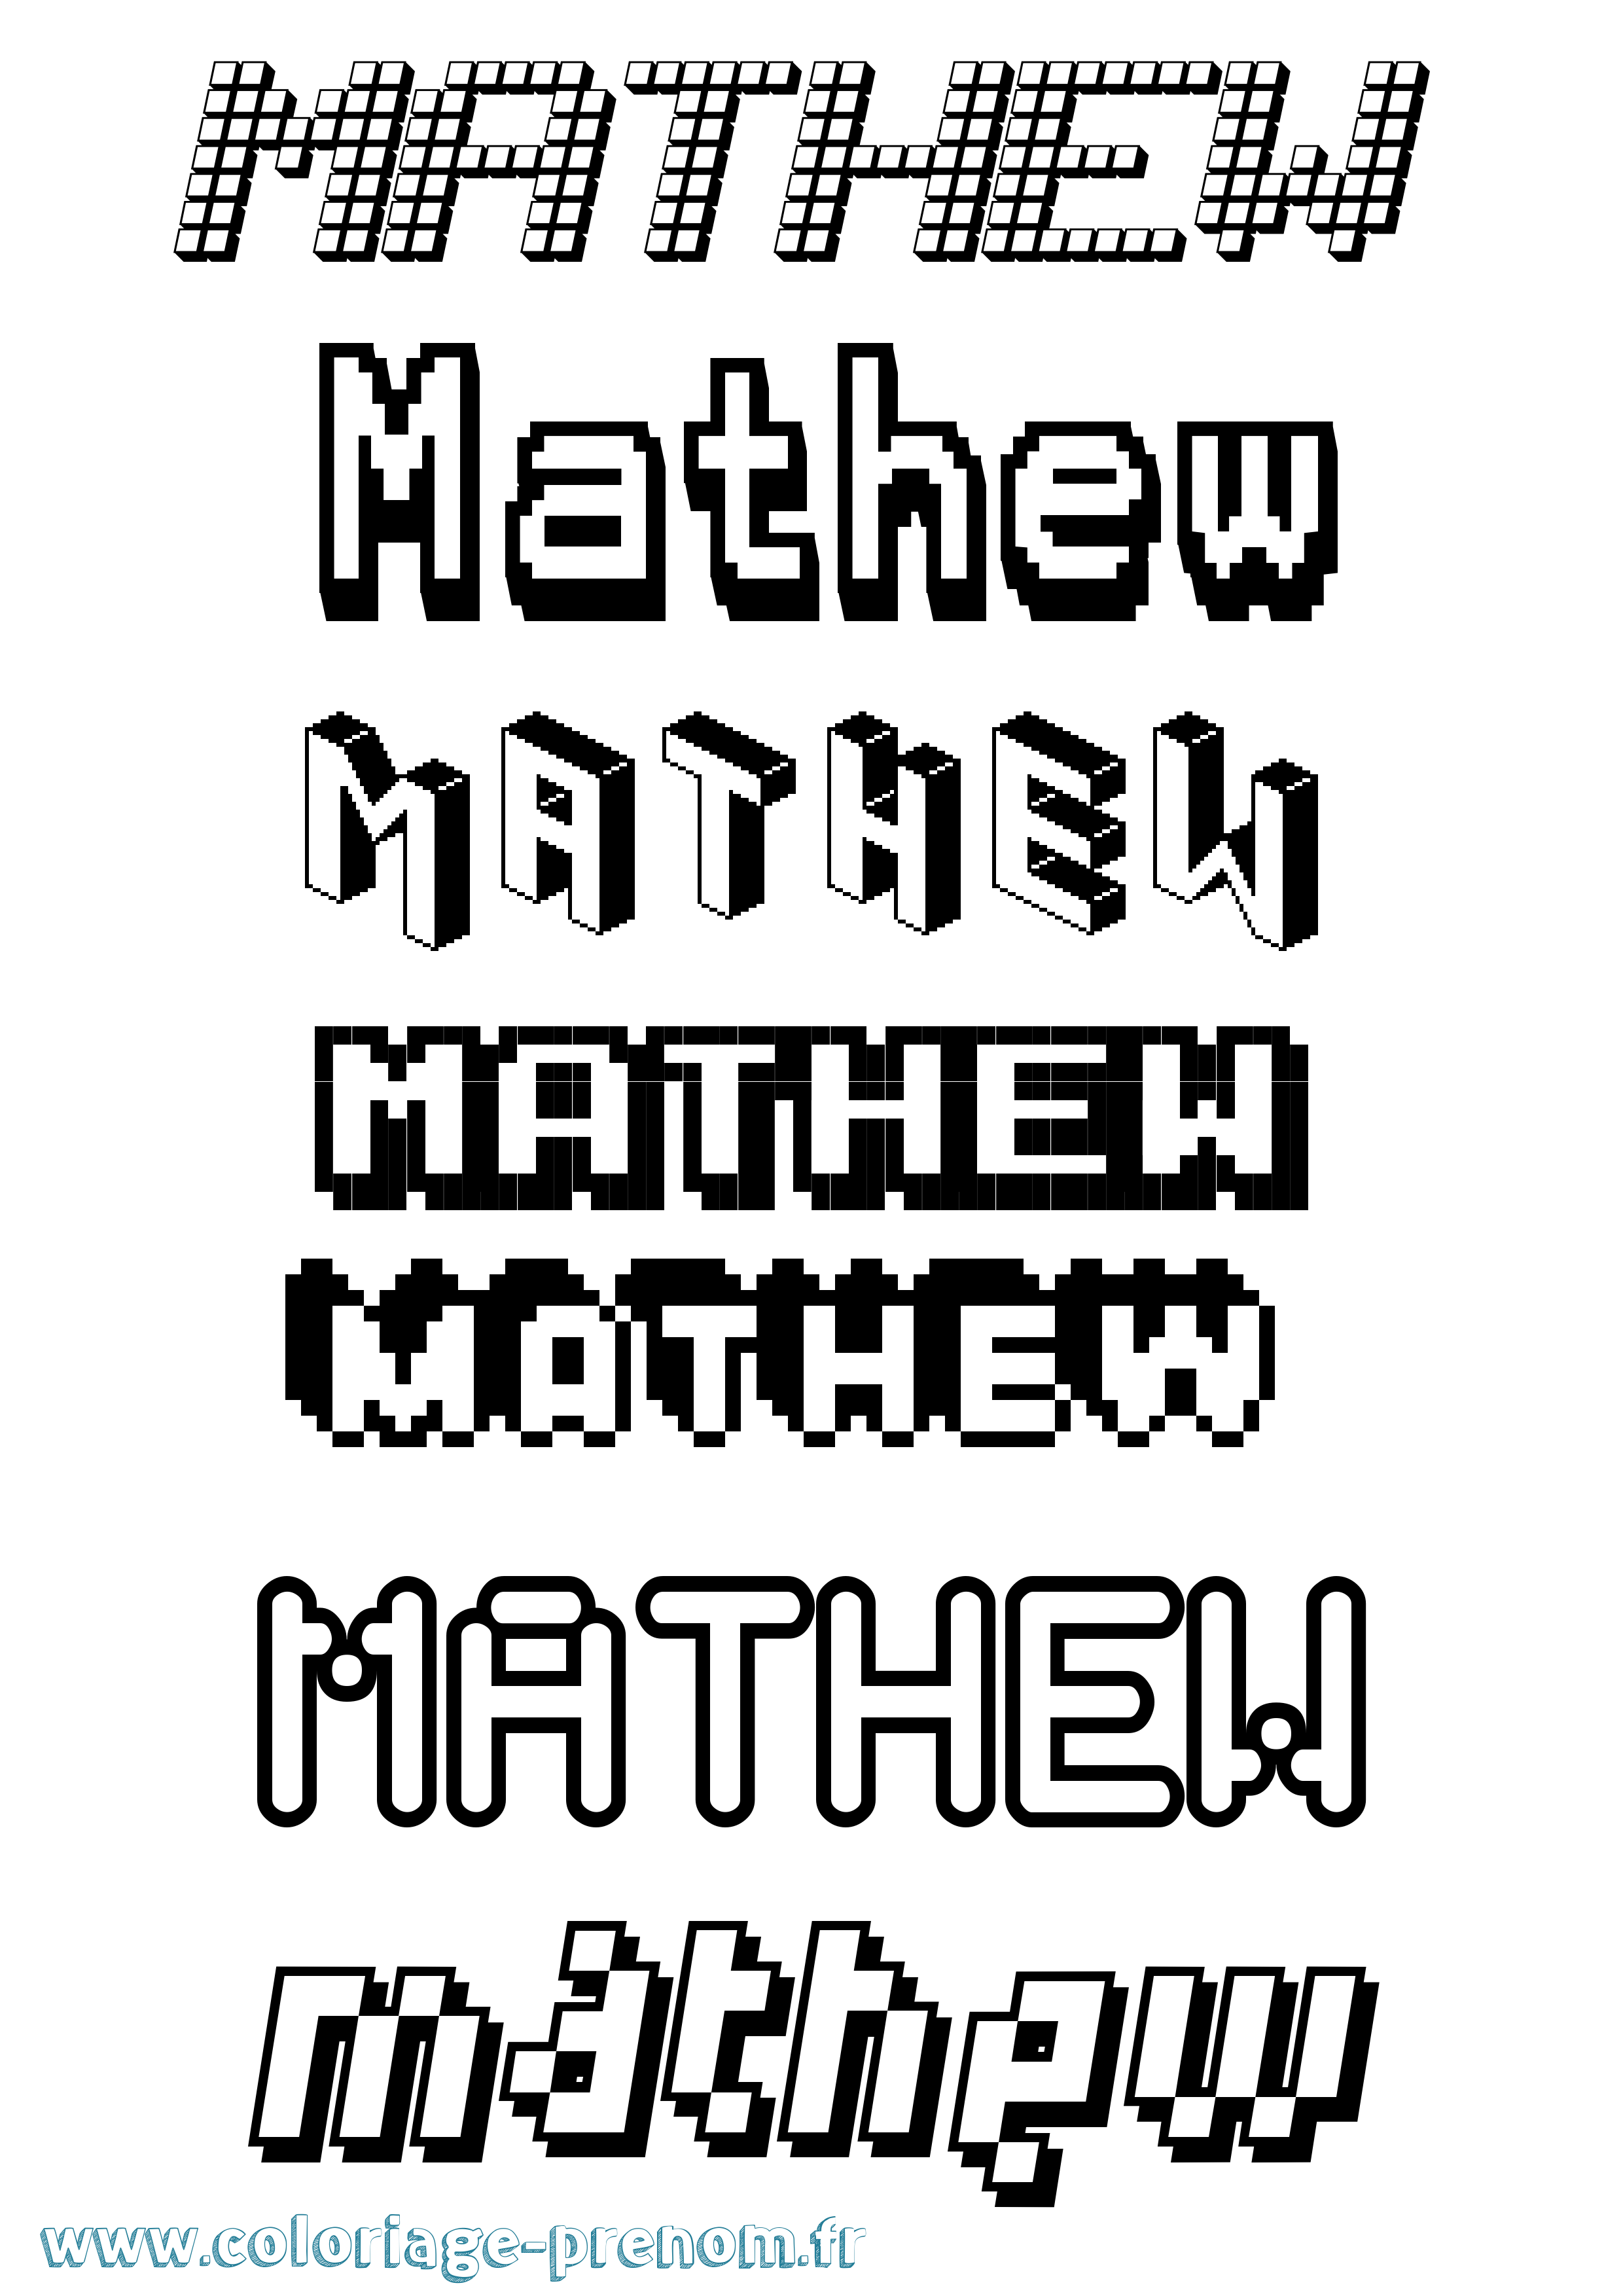 Coloriage prénom Mathew Pixel